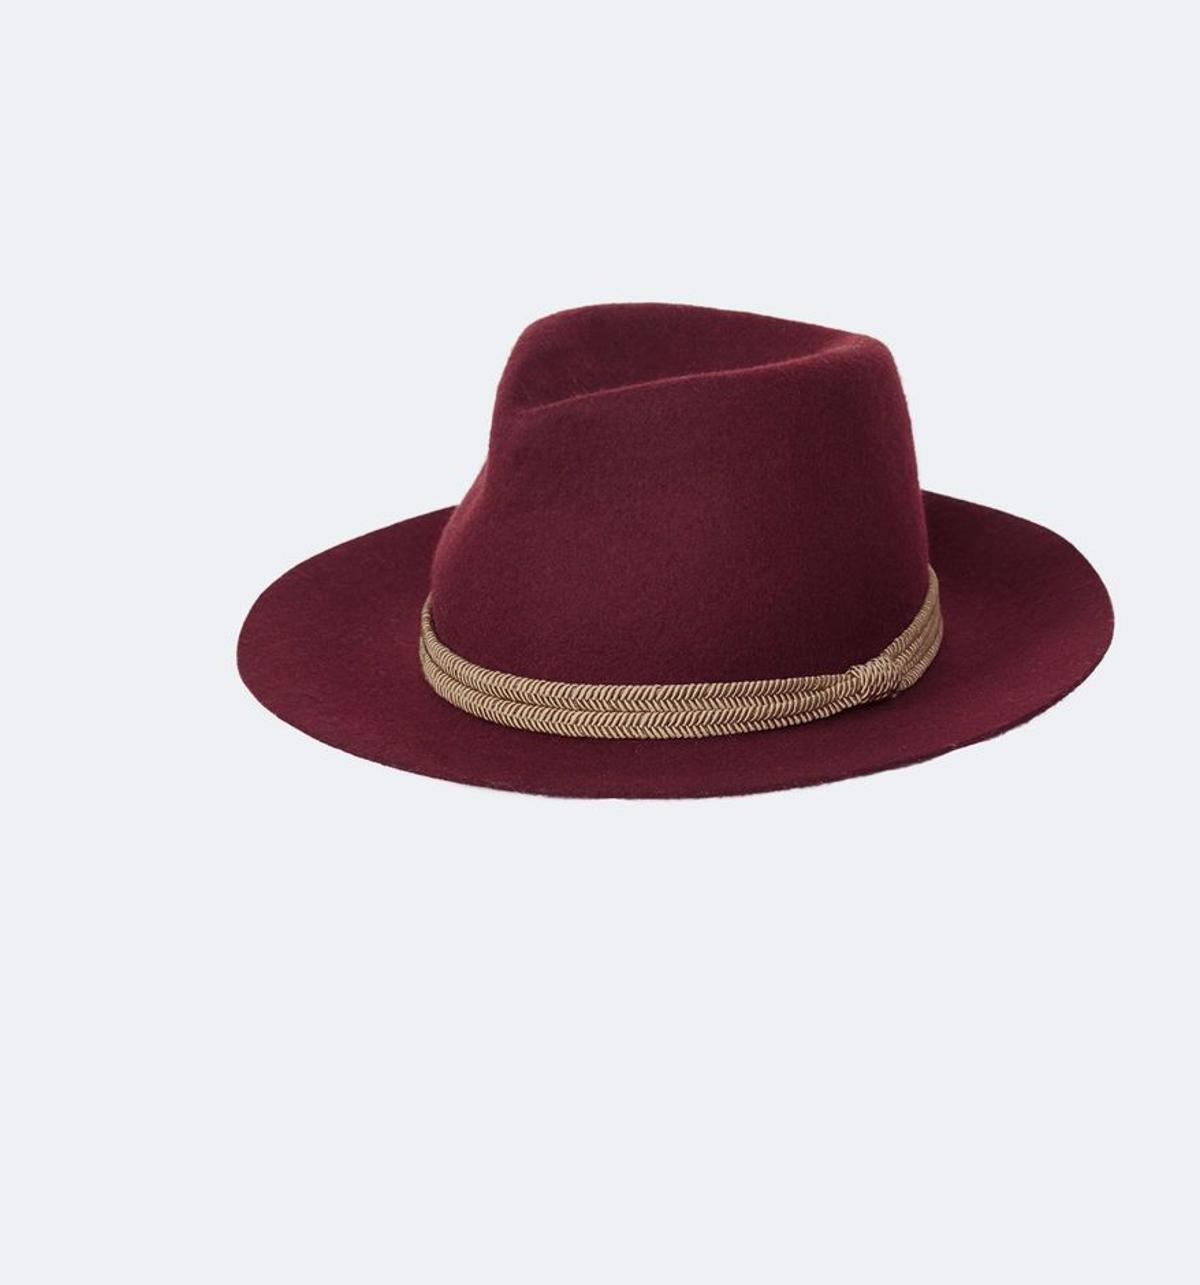 Rebajas Maje 2016: sombrero de lana (100 €)